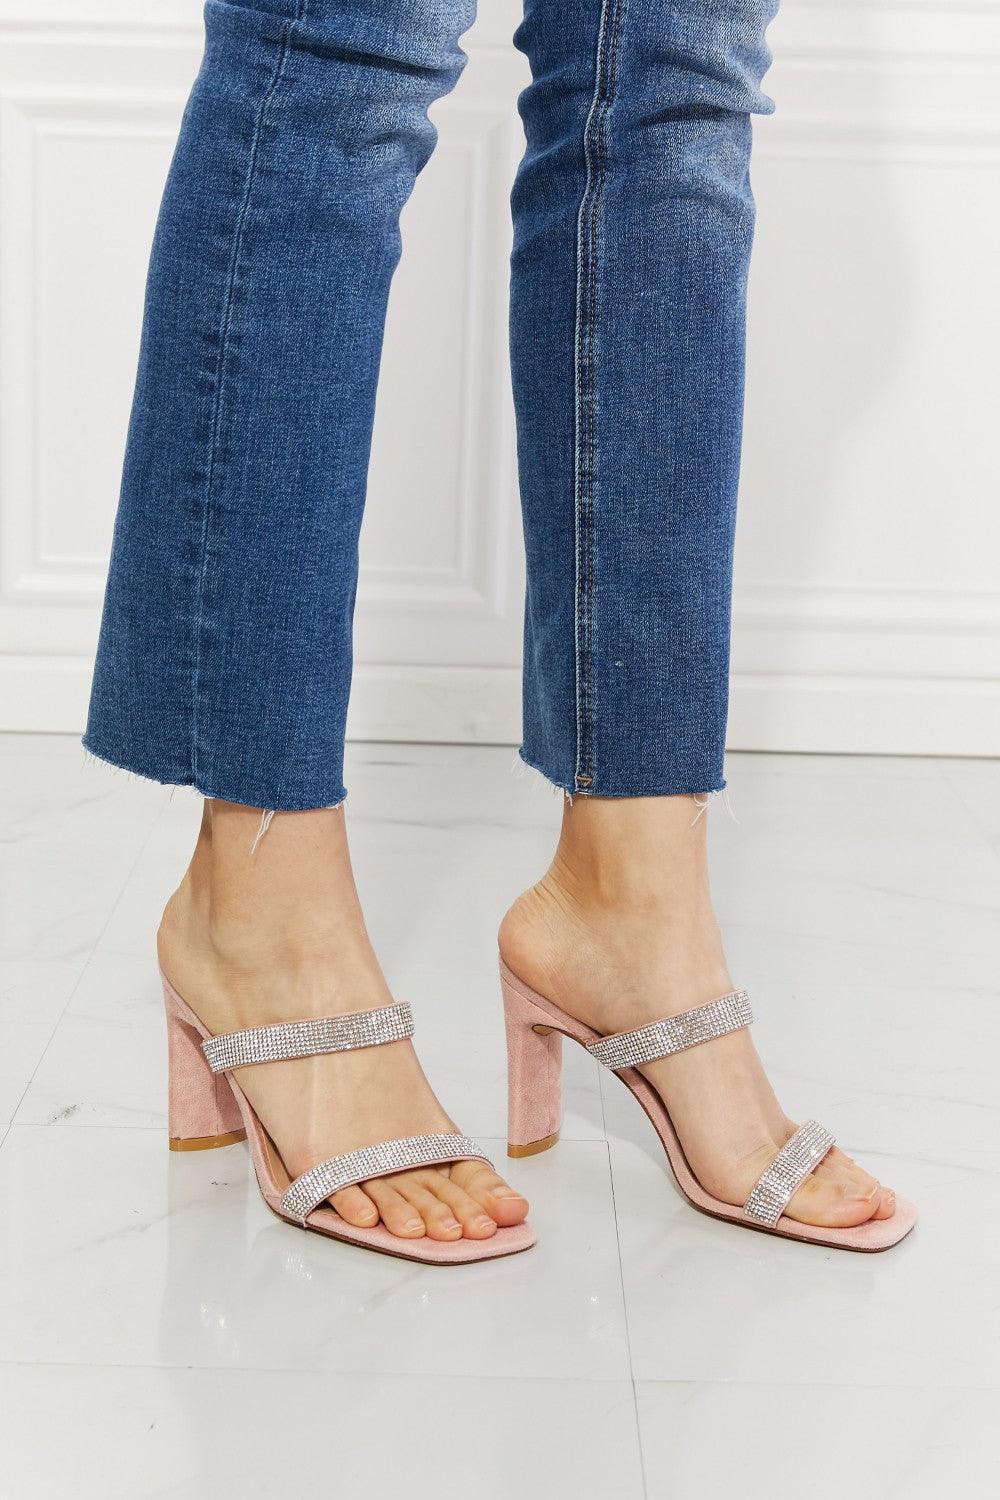 MMShoes Hint Of Shimmer Block Heel Pink Rhinestone Sandals - MXSTUDIO.COM